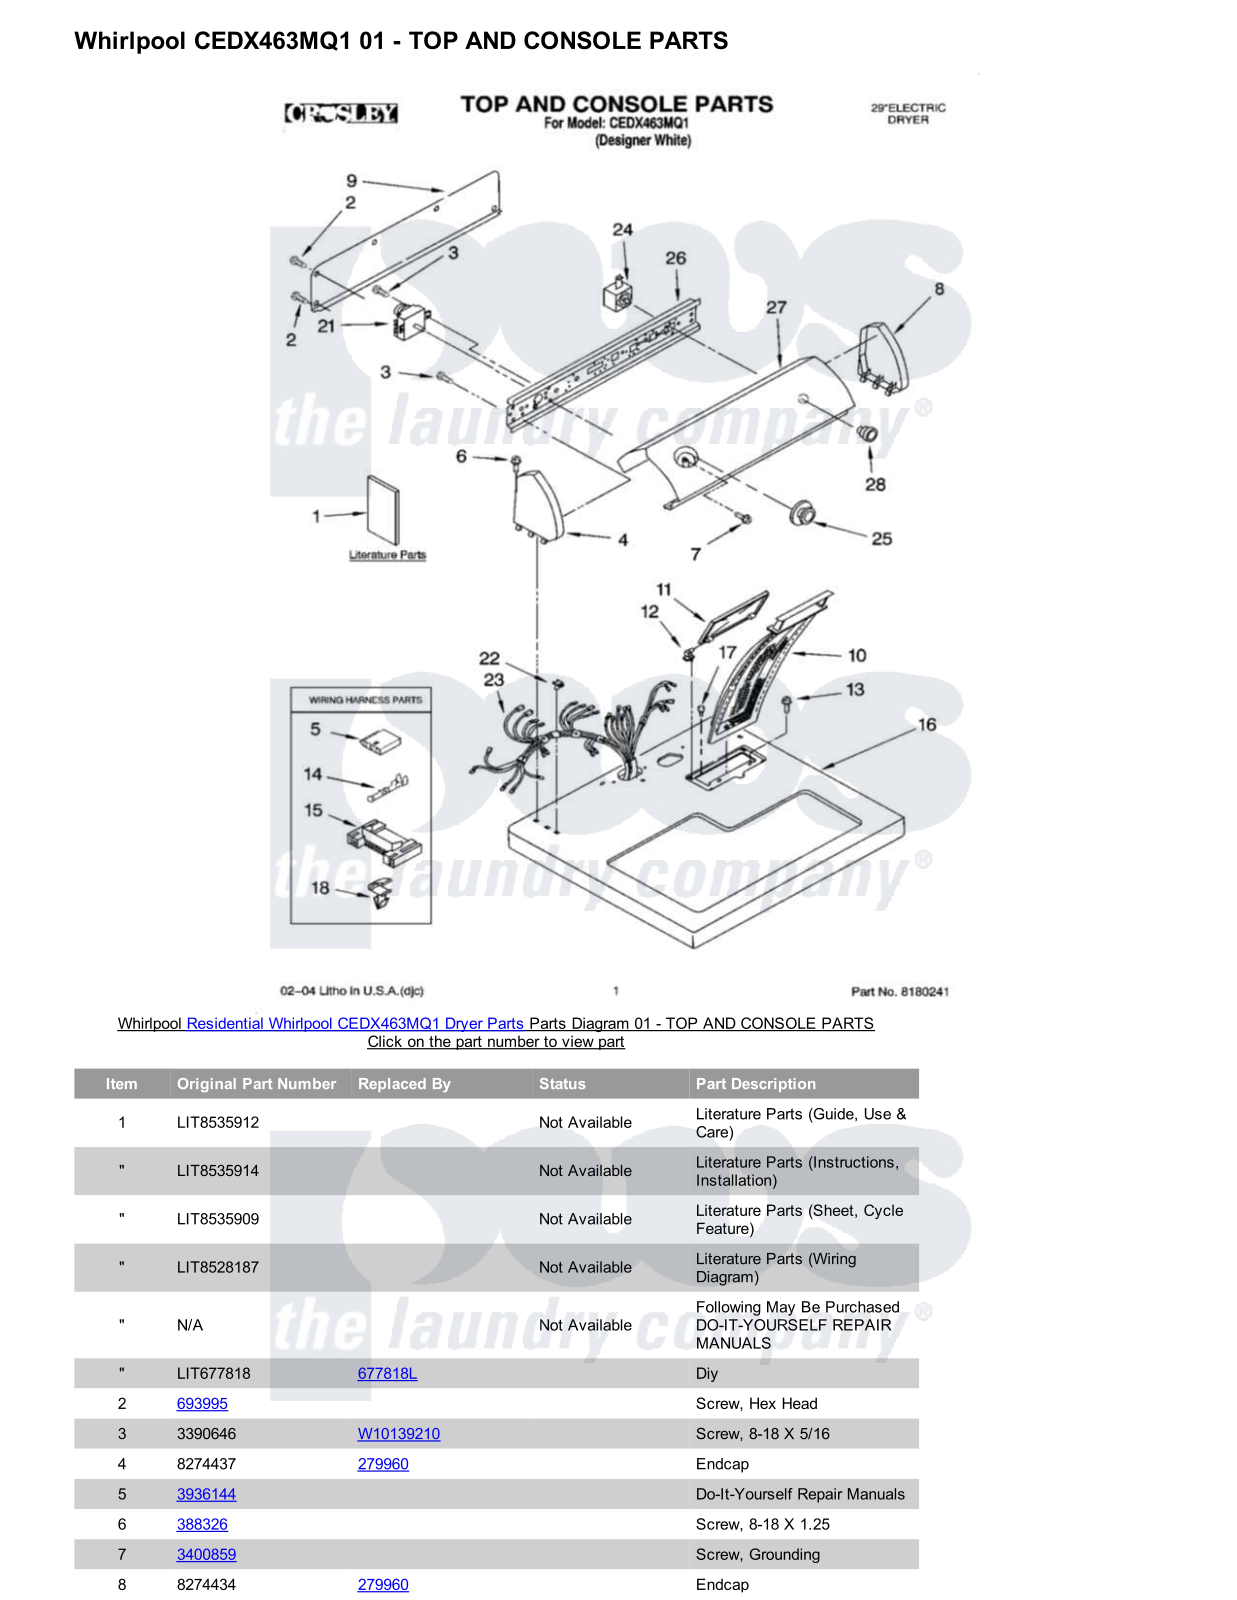 Whirlpool CEDX463MQ1 Parts Diagram